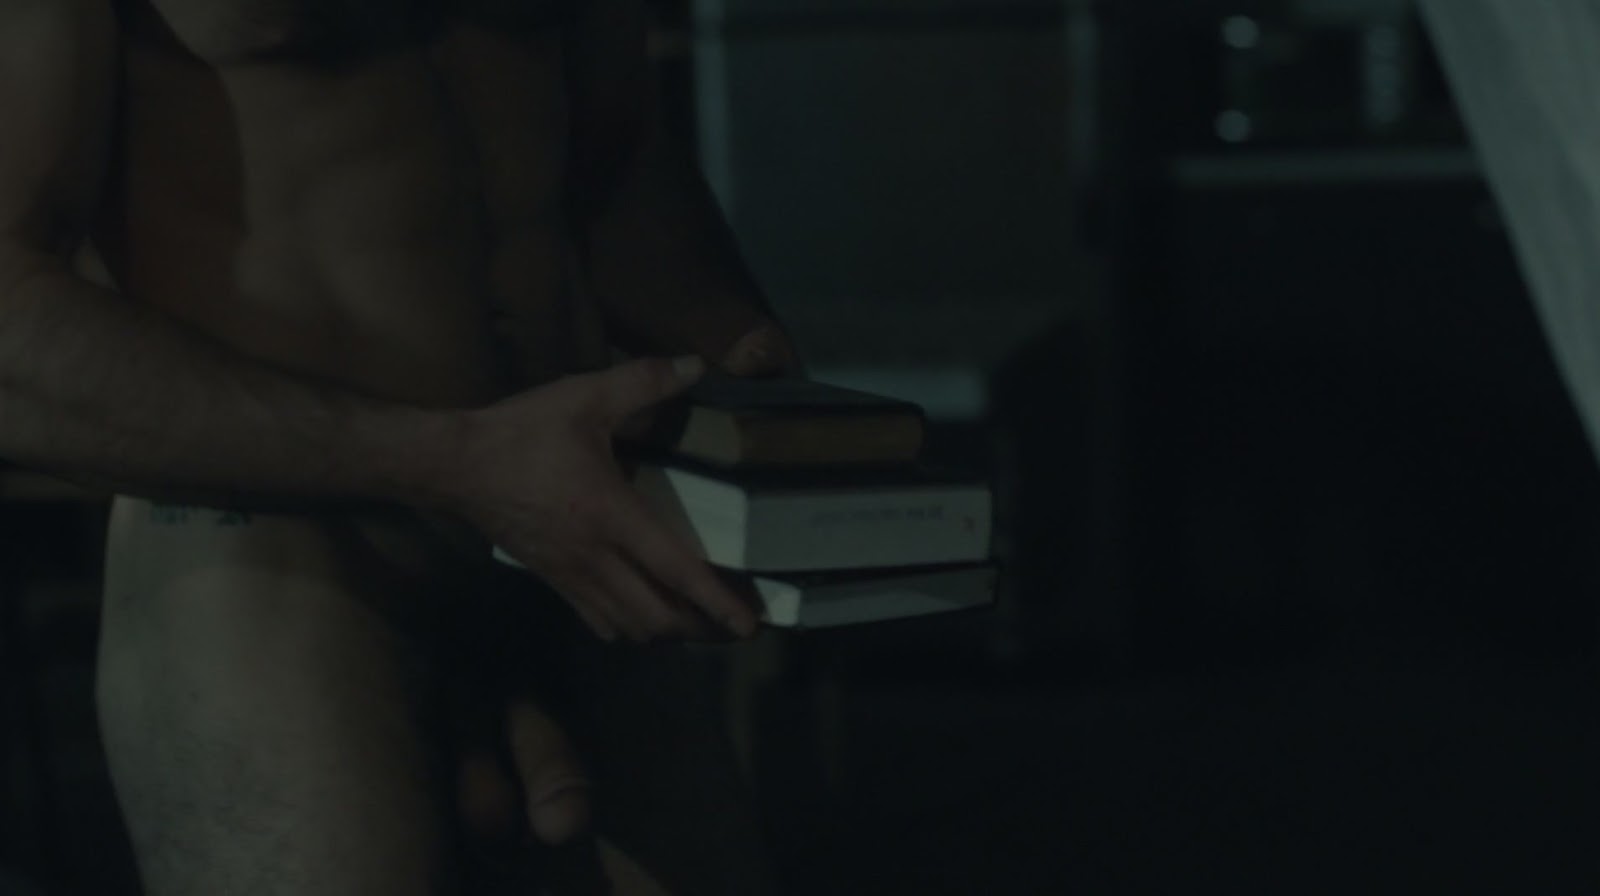 He’s Naked: Morgan Spector Going Frontal in 'Split' (2016) .